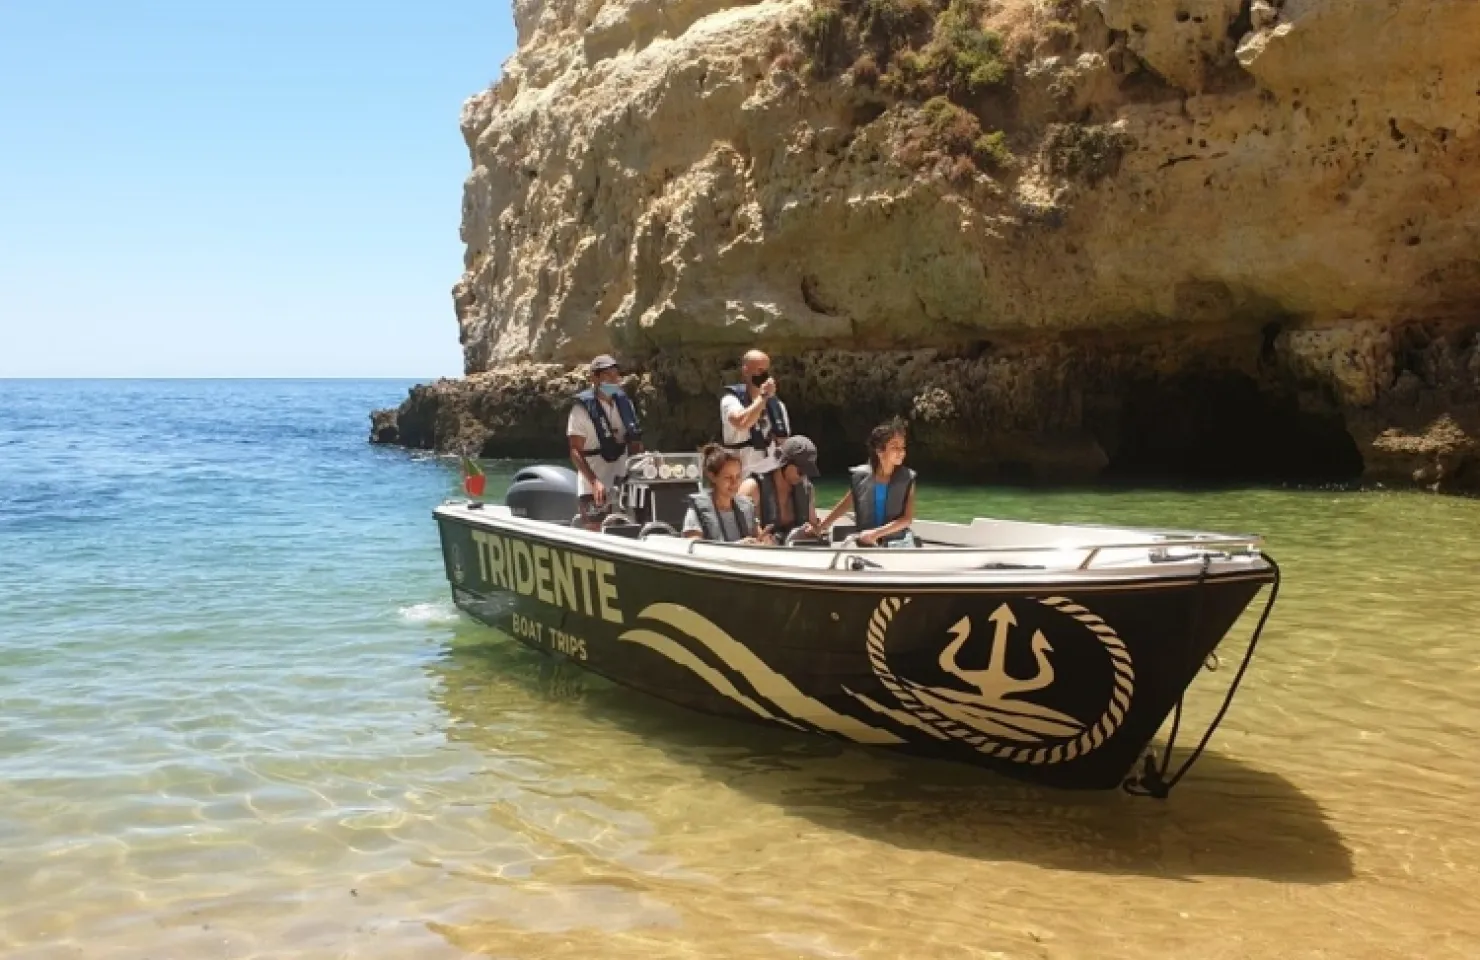 Benagil Cave Cruise by Tridente Boat Trips - Albufeira Boat Trips